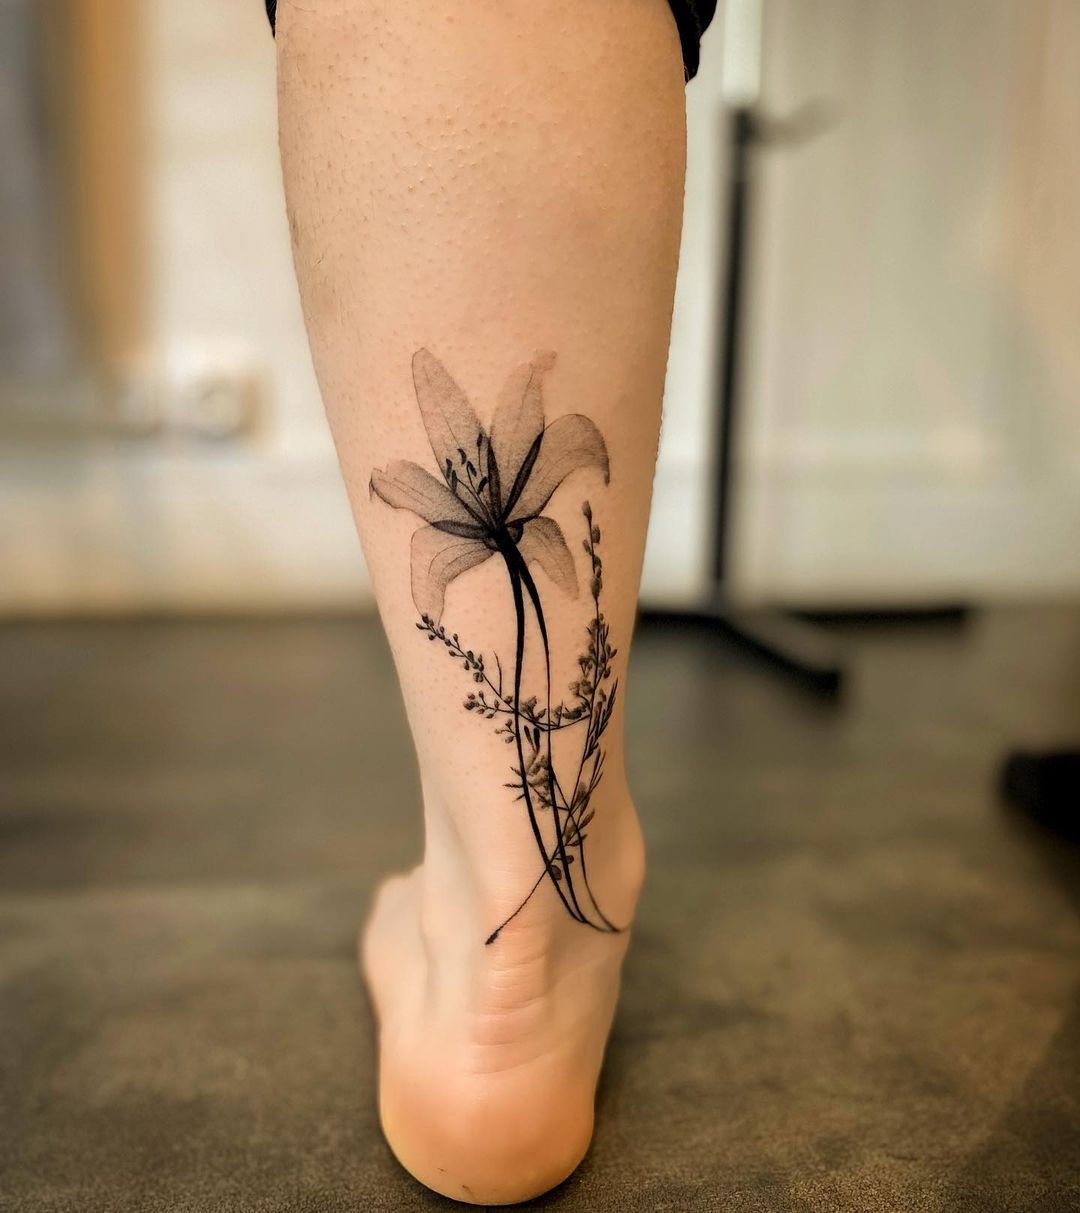 Lily Tattoo Designs 